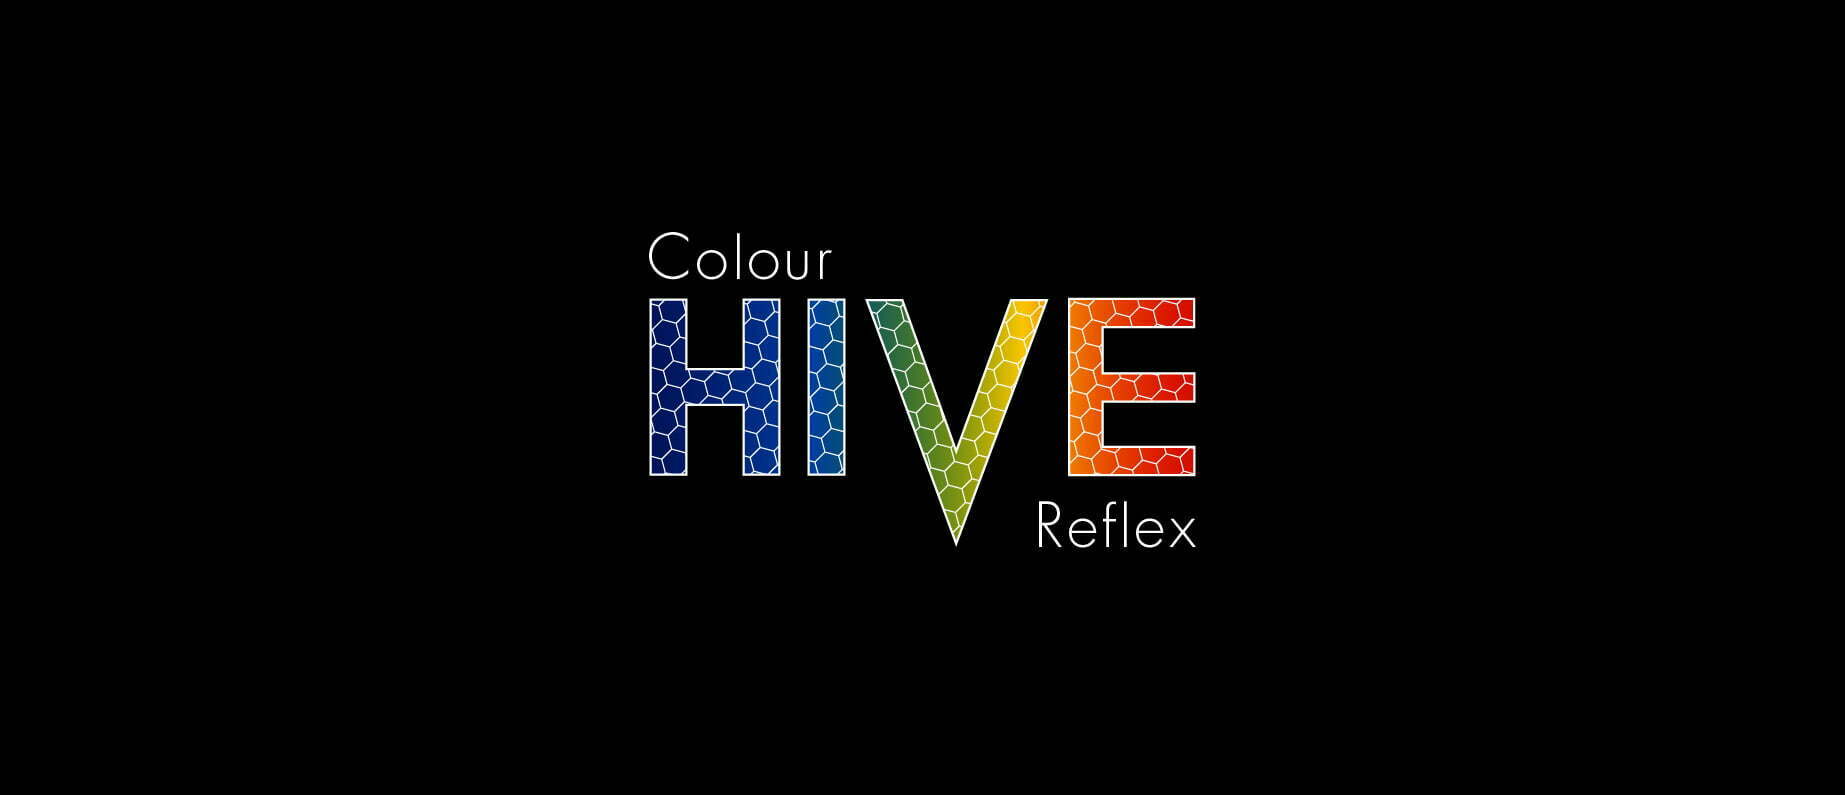 Introducing the Colour HIVE, Reflex’s dedicated colour management facility